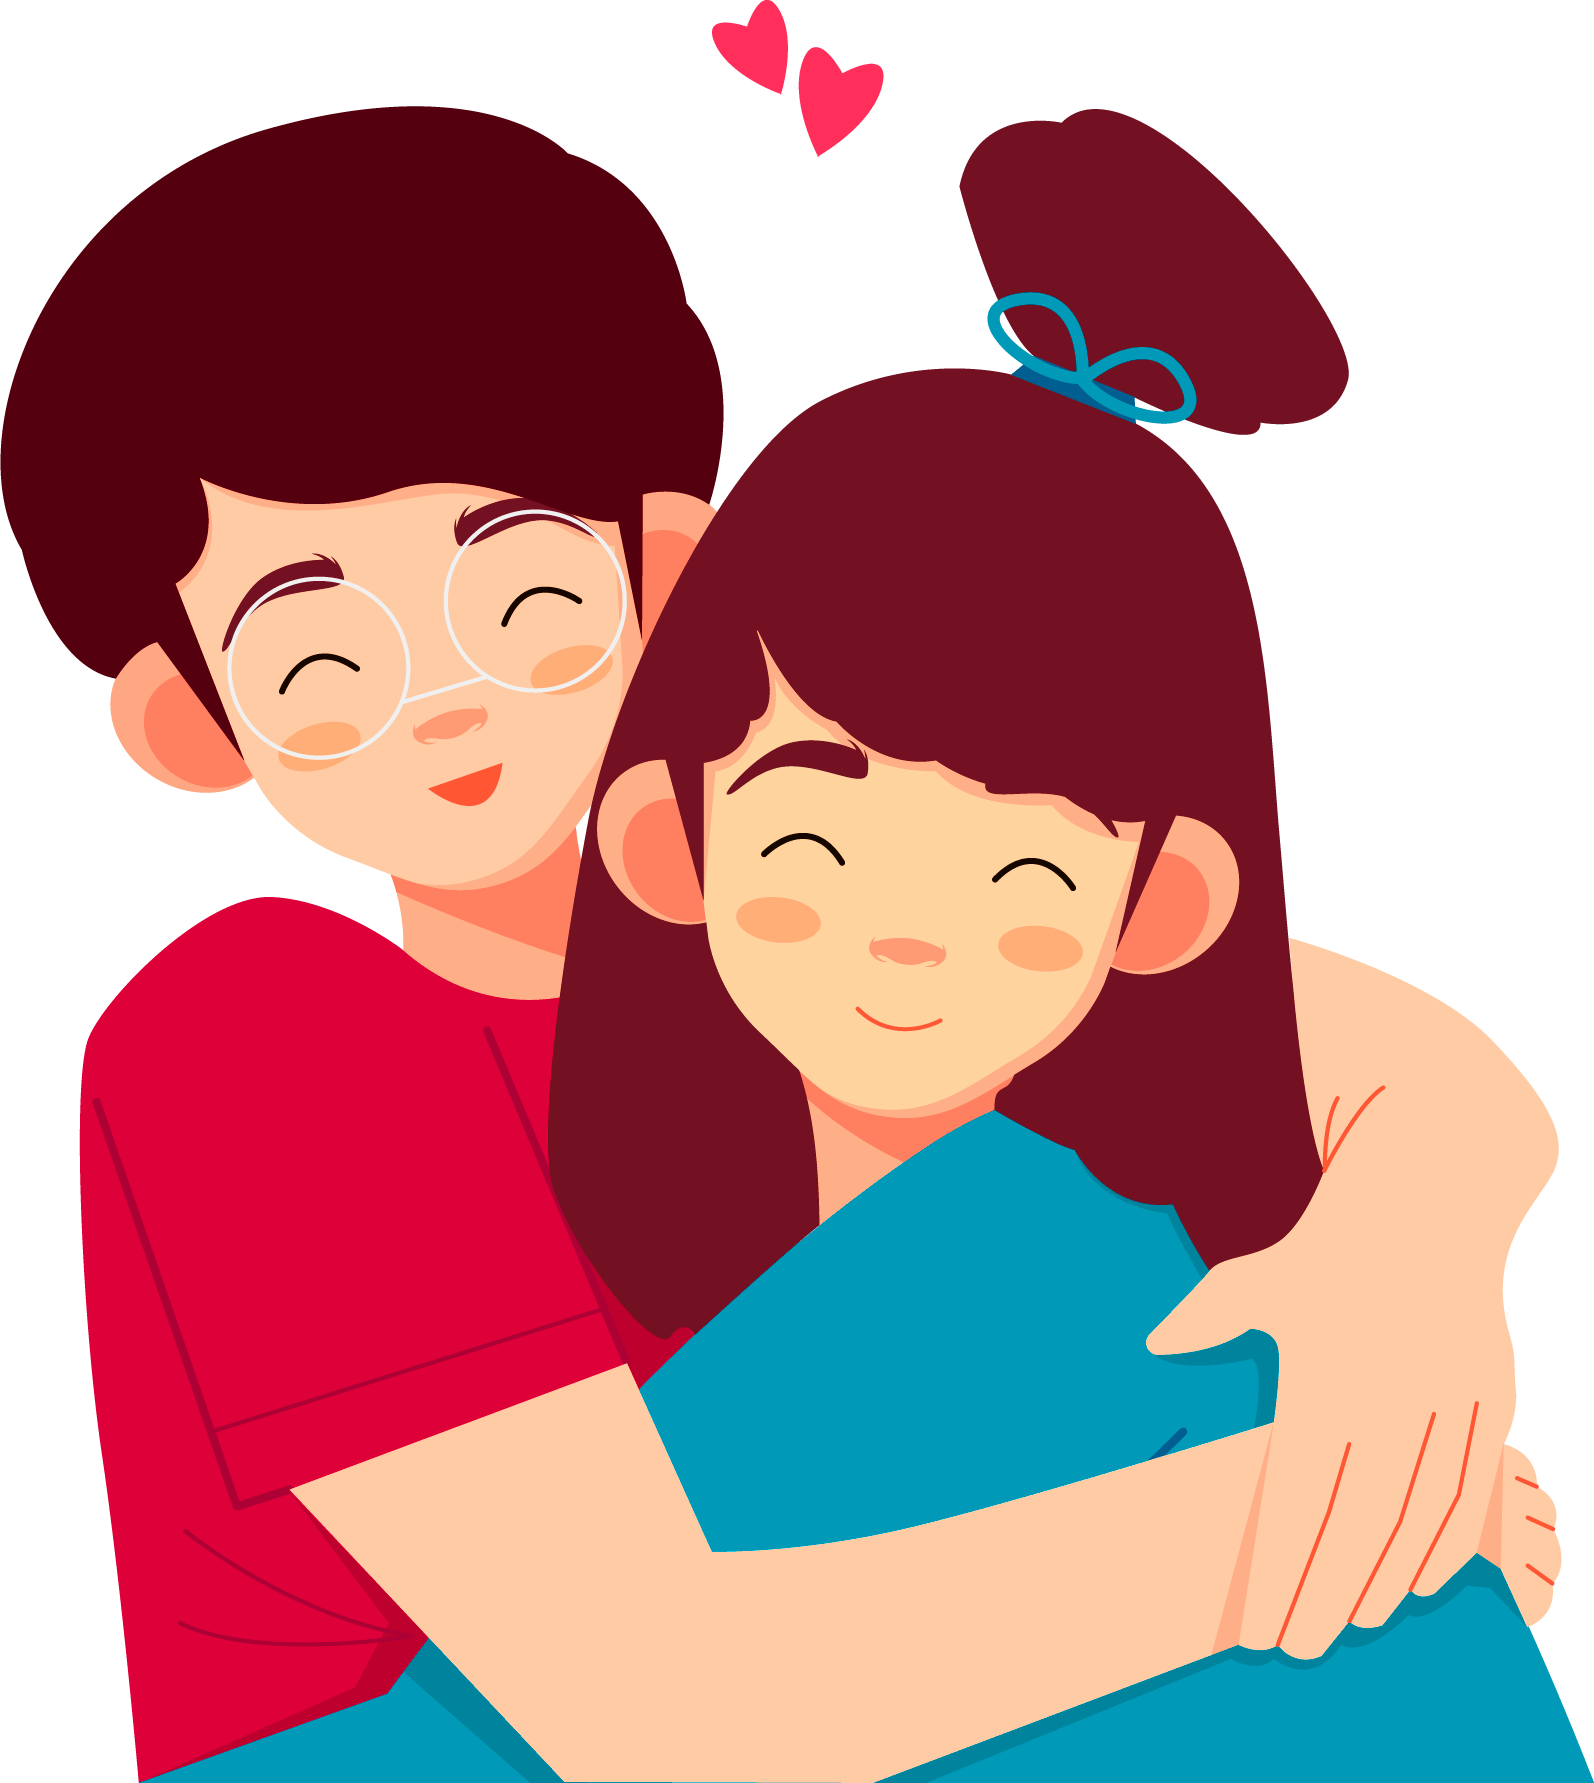 Happy hug day couple hugging cartoon illustrations png